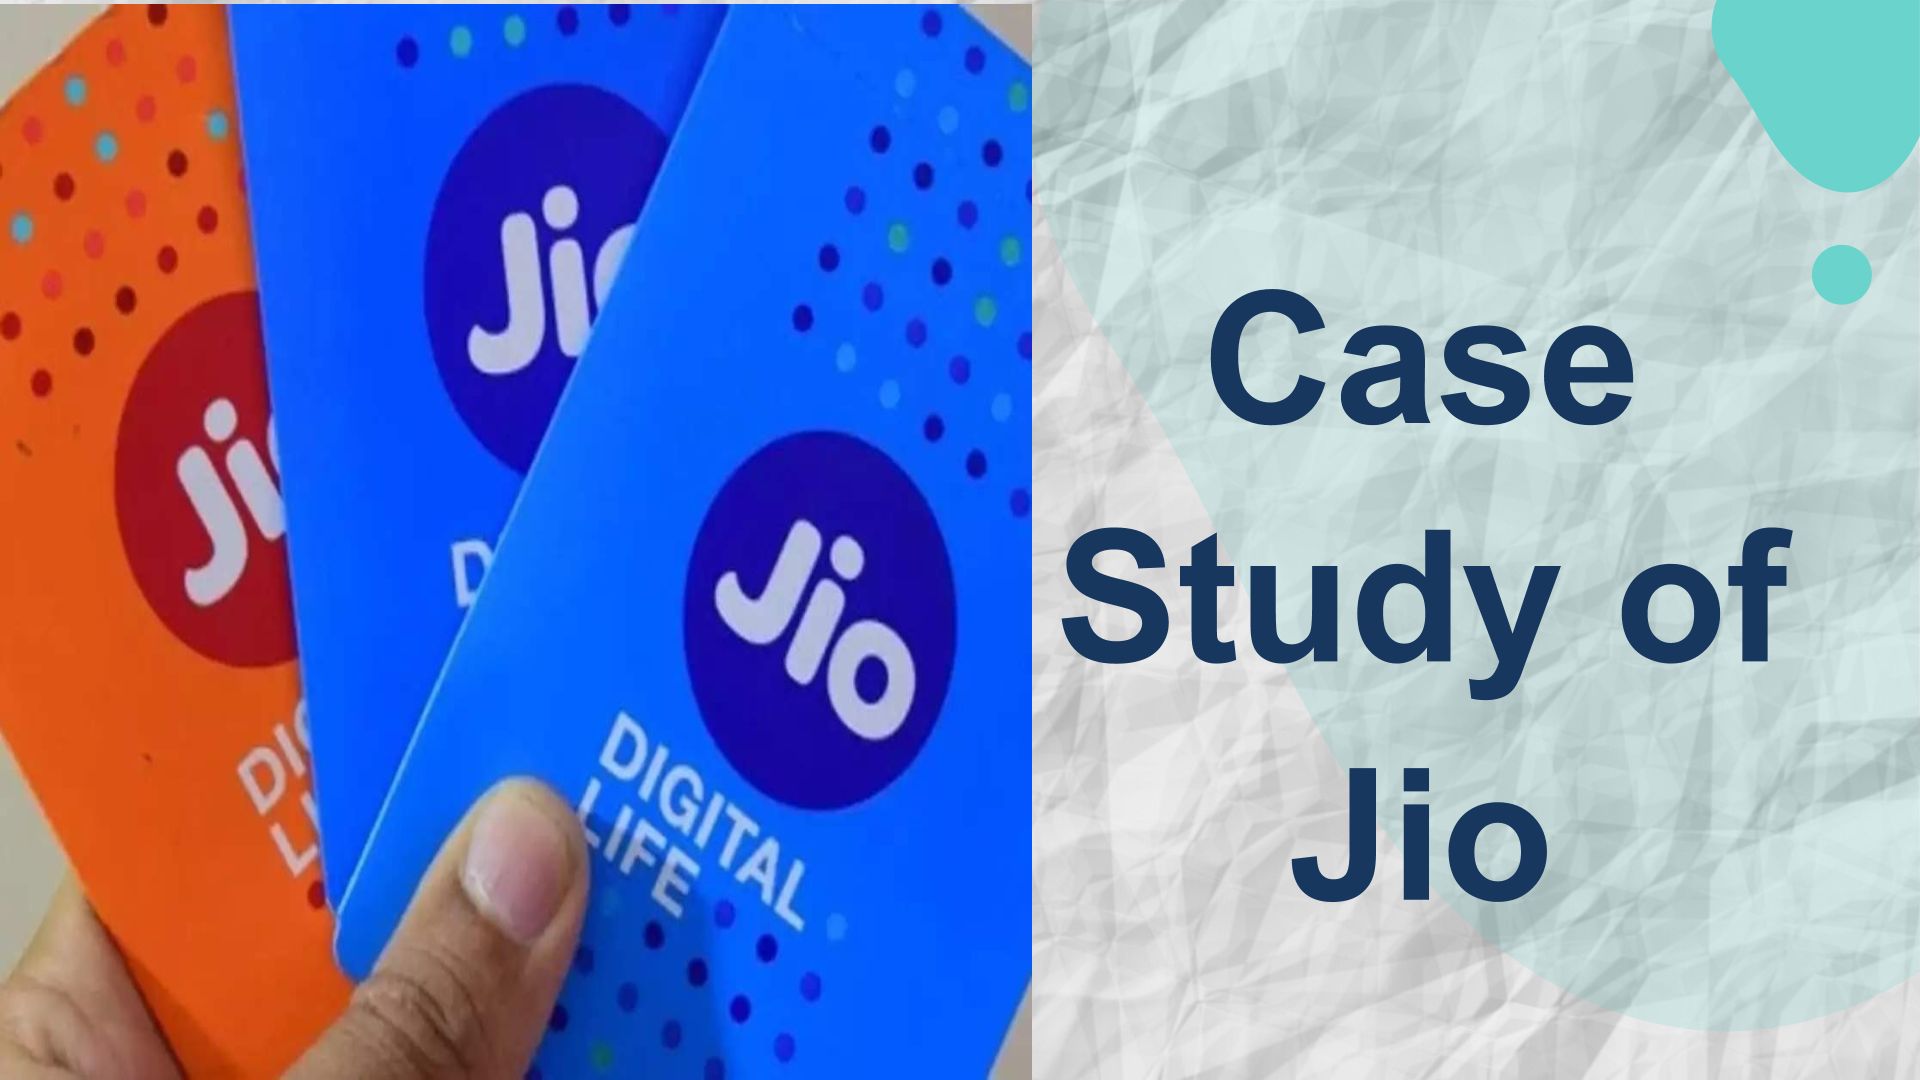 jio marketing strategy case study